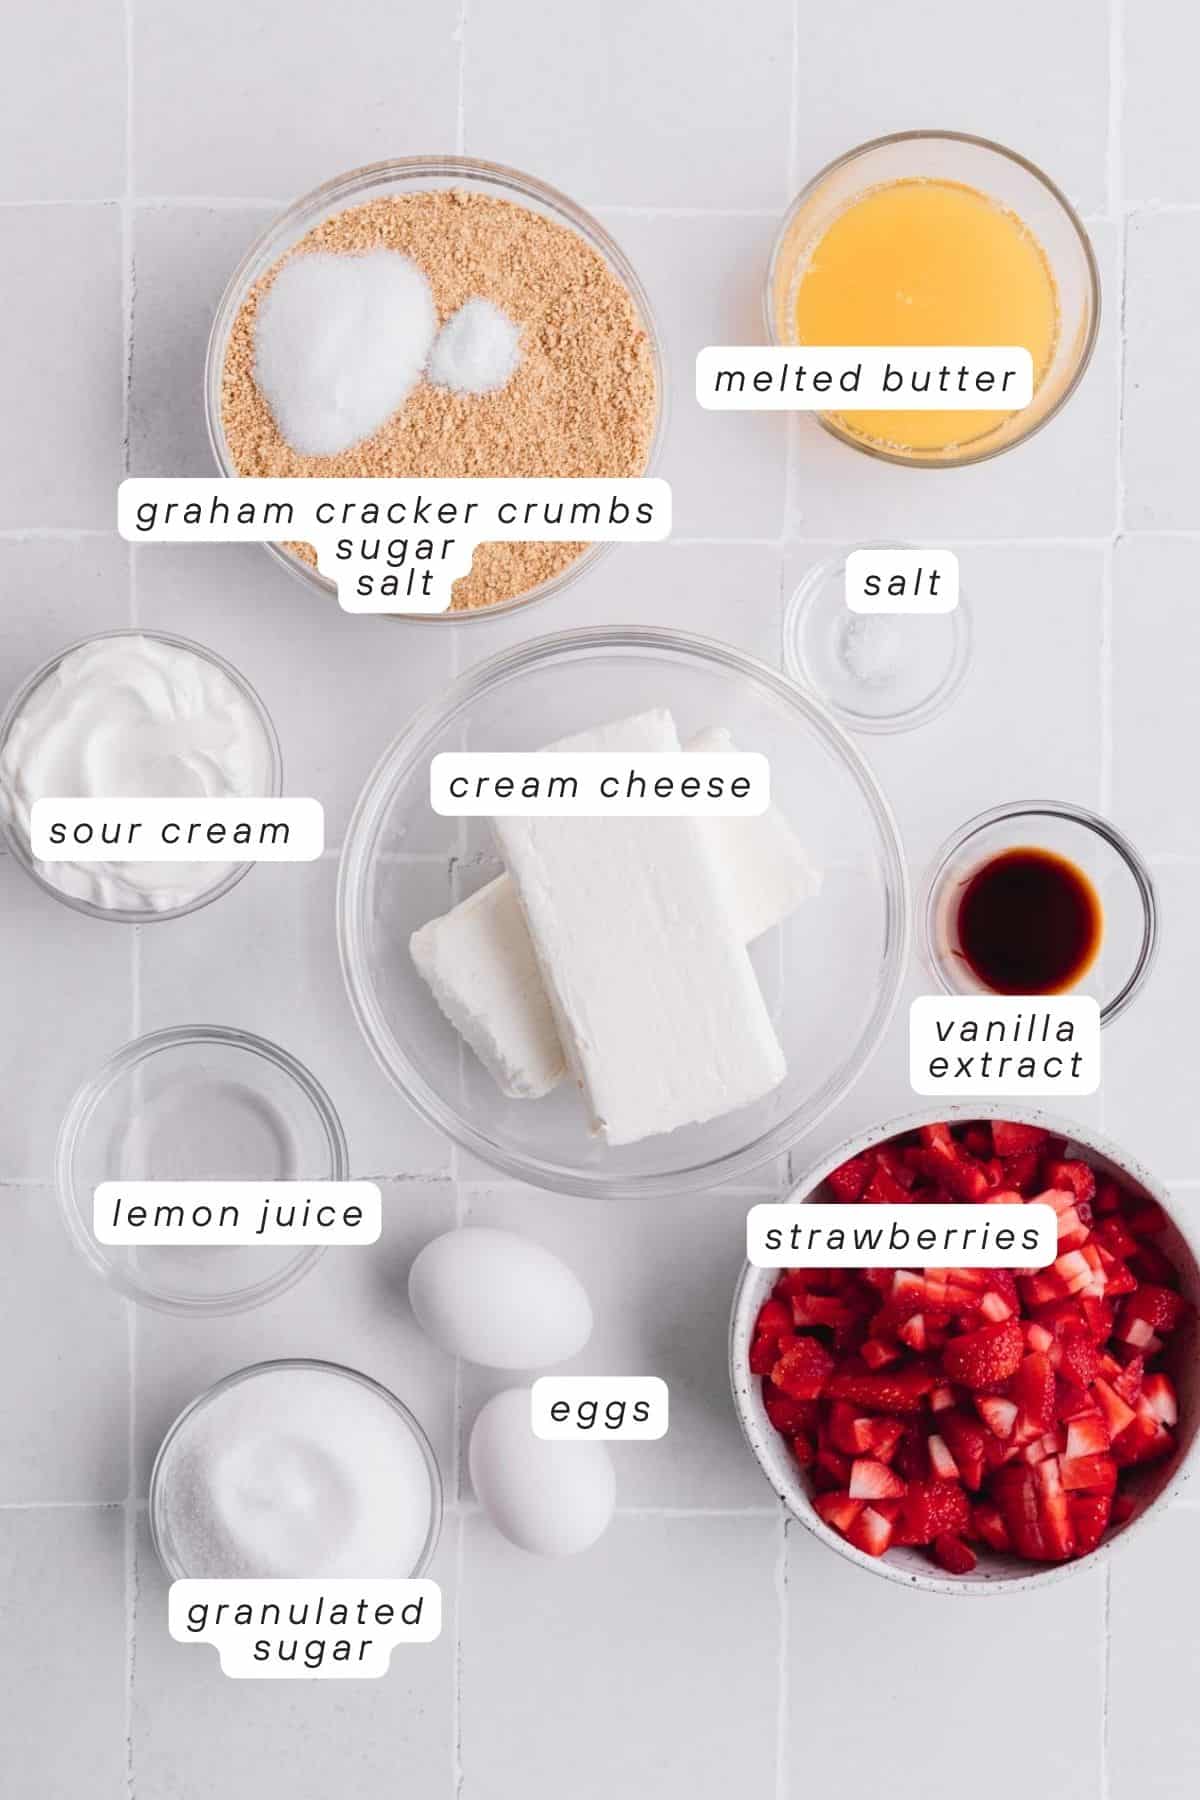 Graham cracker crumbs, sugar, salt, melted butter, cream cheese, vanilla extract, strawberries, eggs, lemon juice and sour cream. 